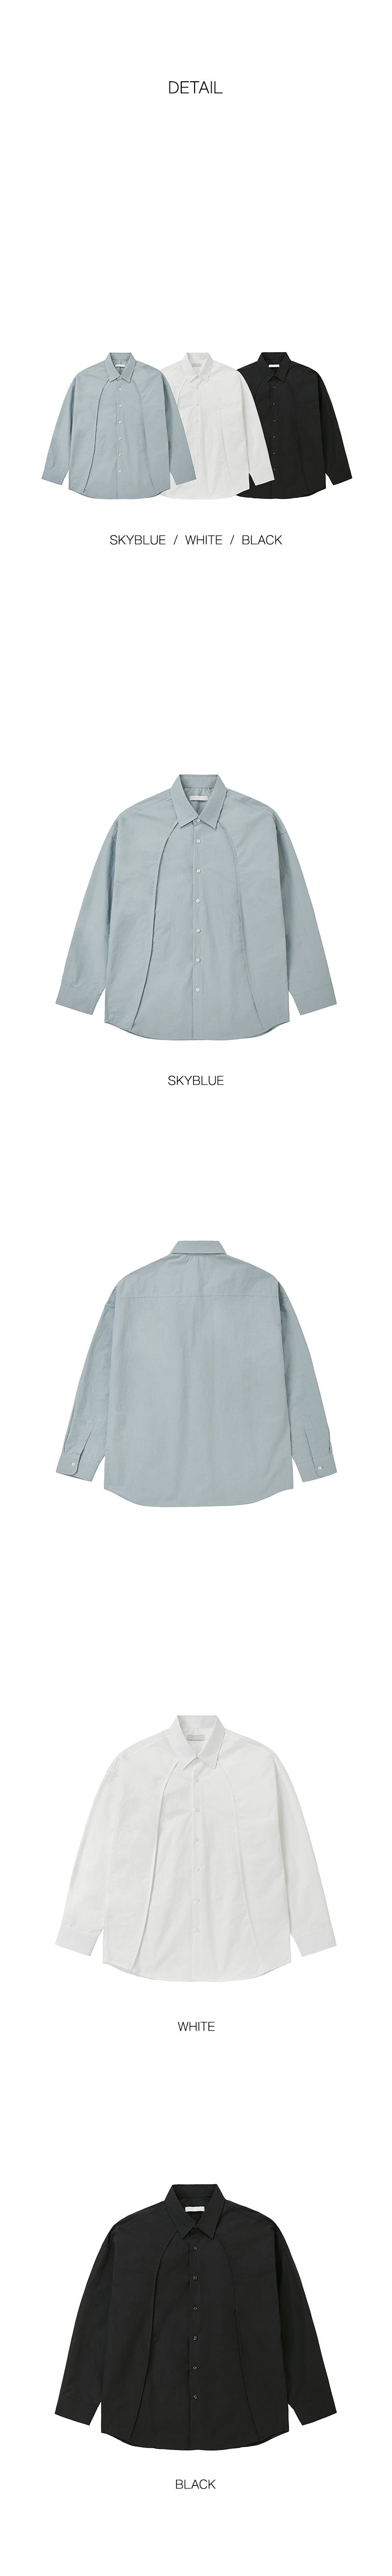 【S/S】カーブラインシャツ(3color)